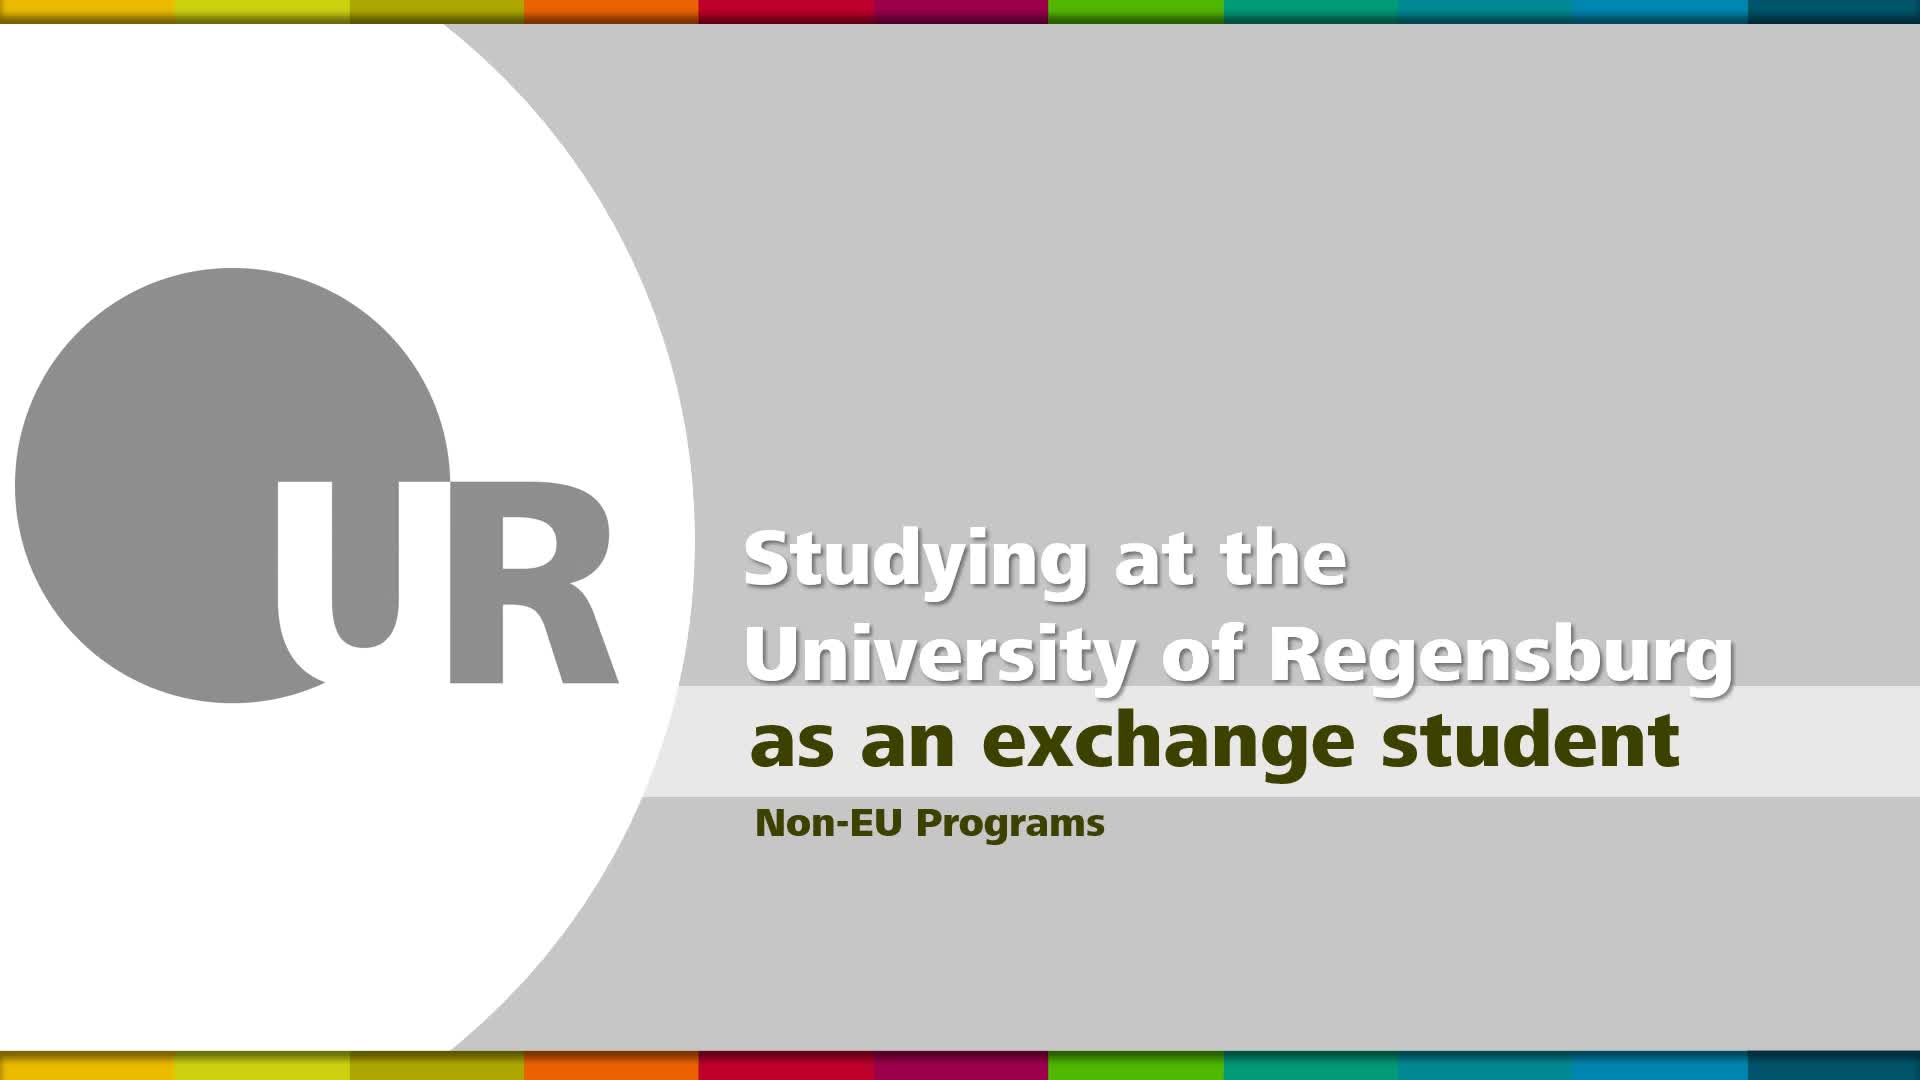 Studying at the University of Regensburg:        Non-EU Exchange Student